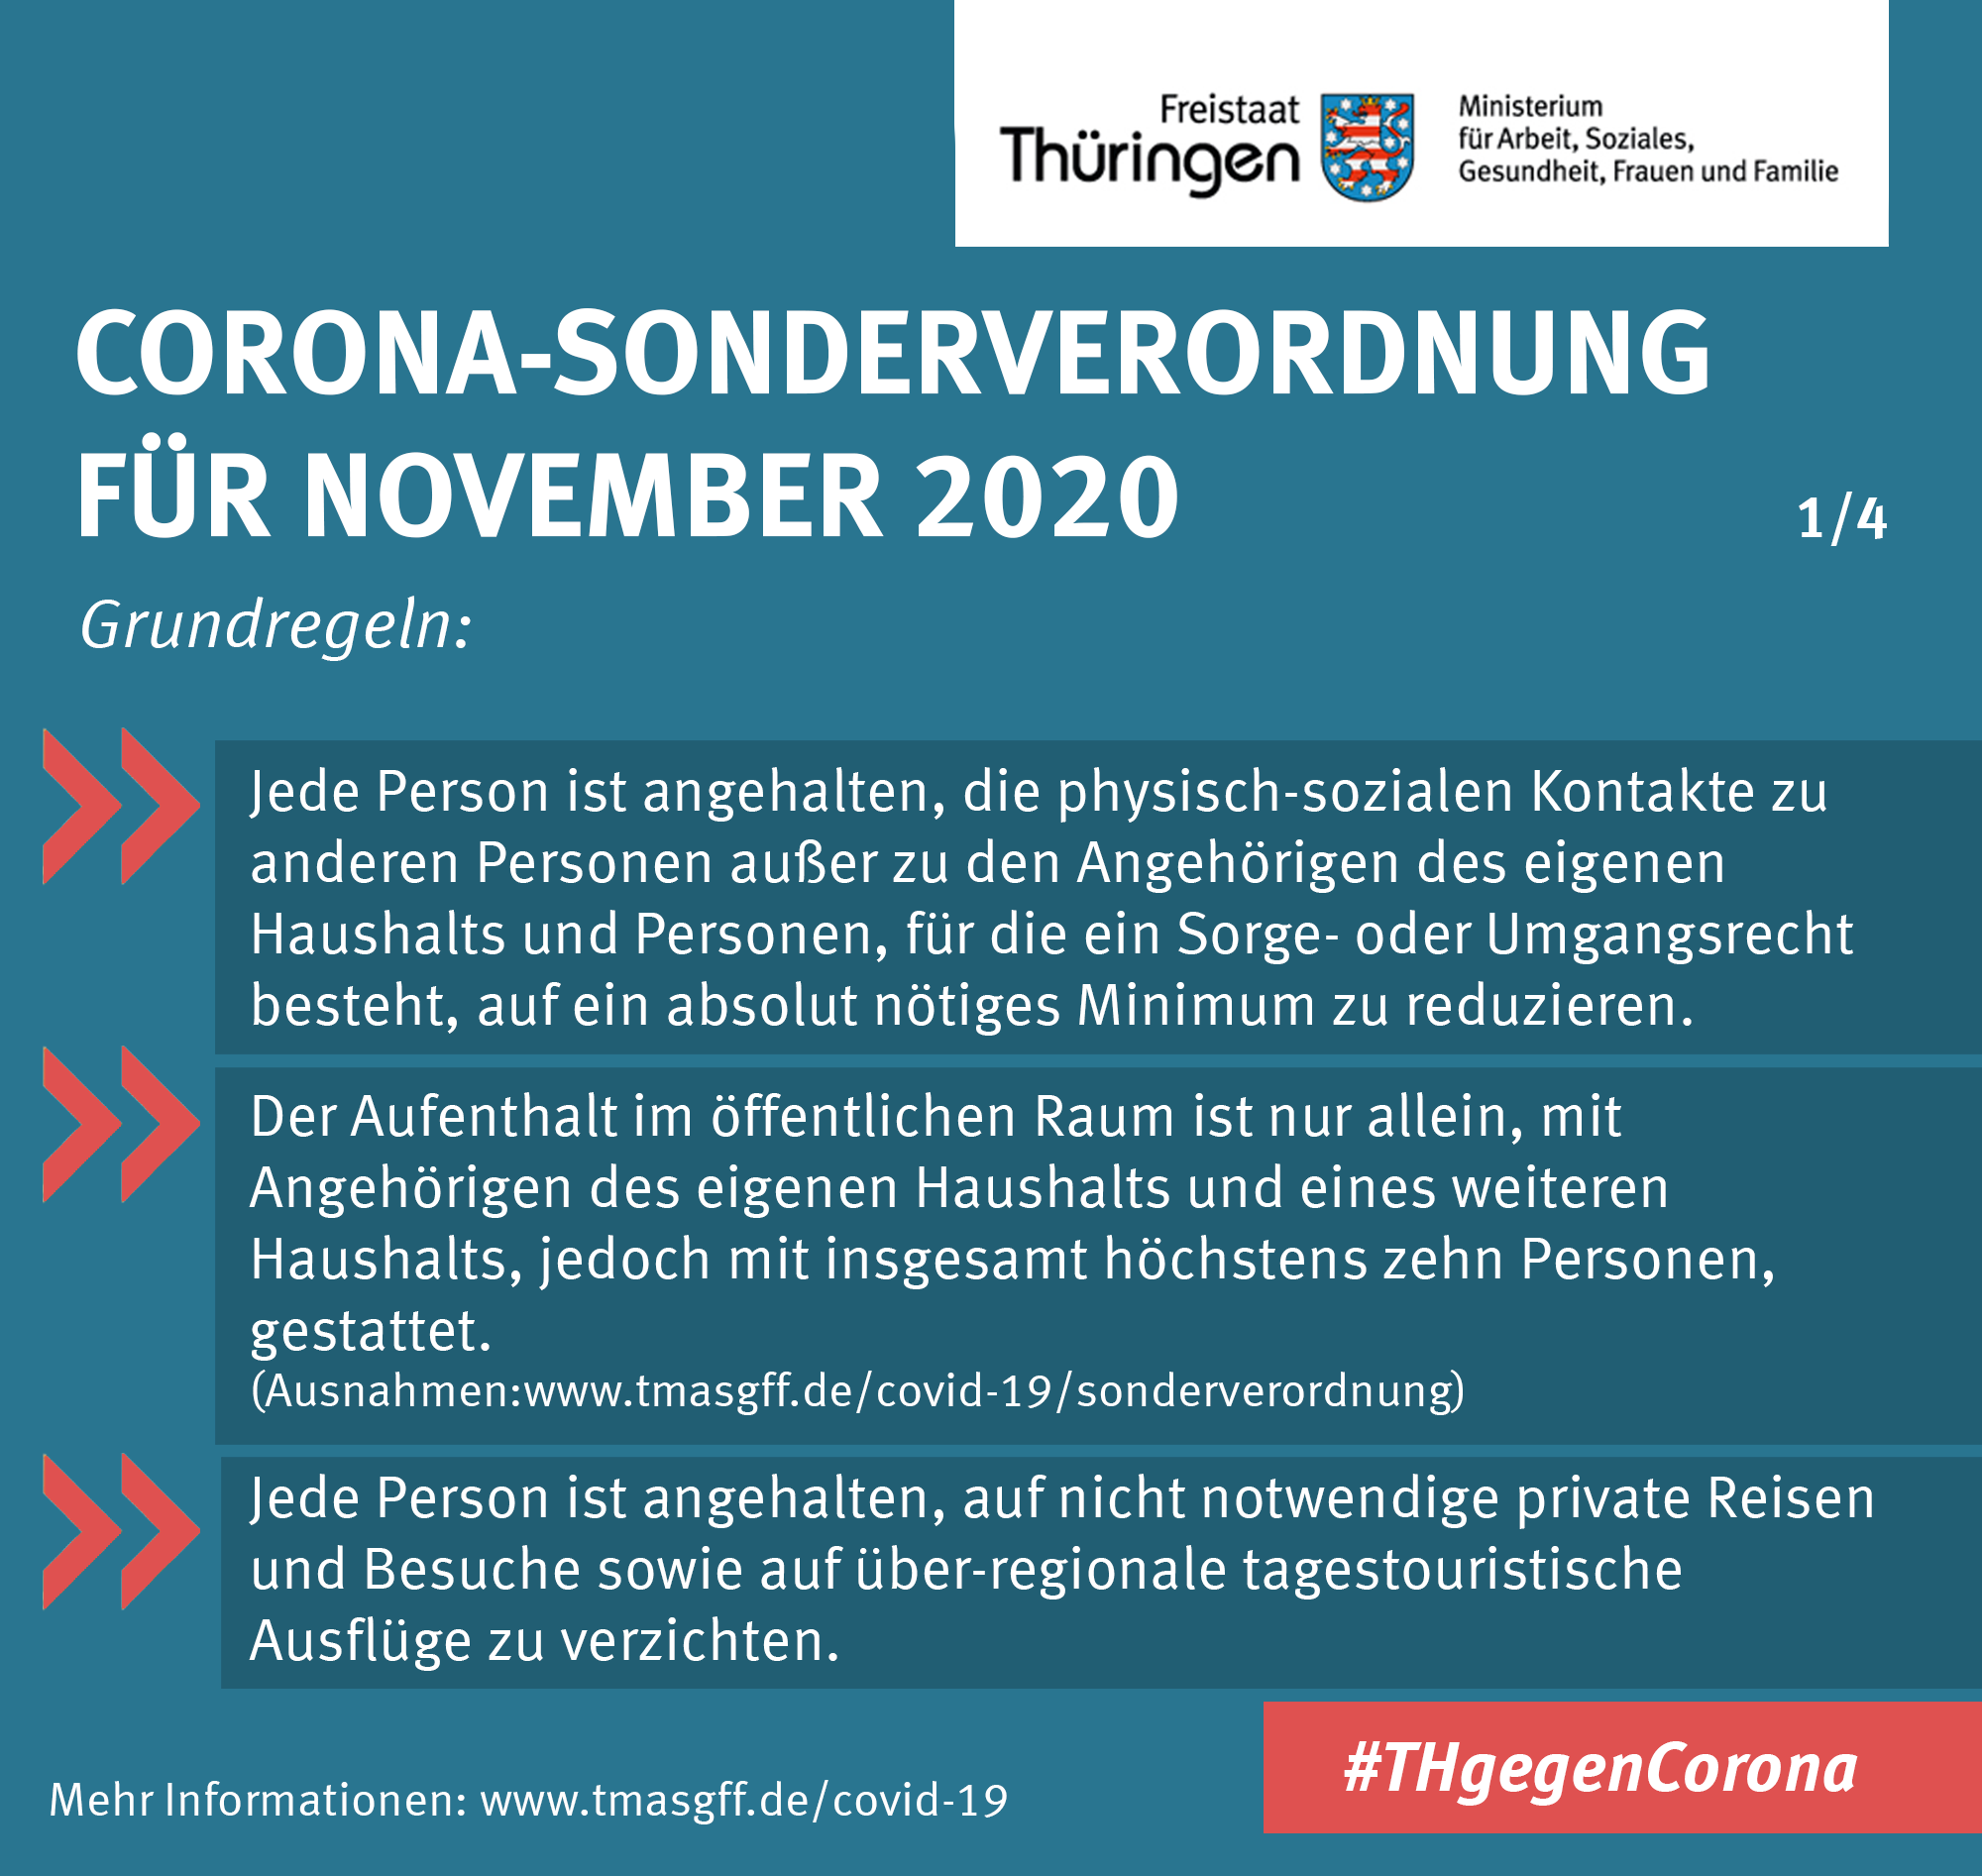 CORONA-SONDERVERORDNUNG FÜR NOVEMBER 2020